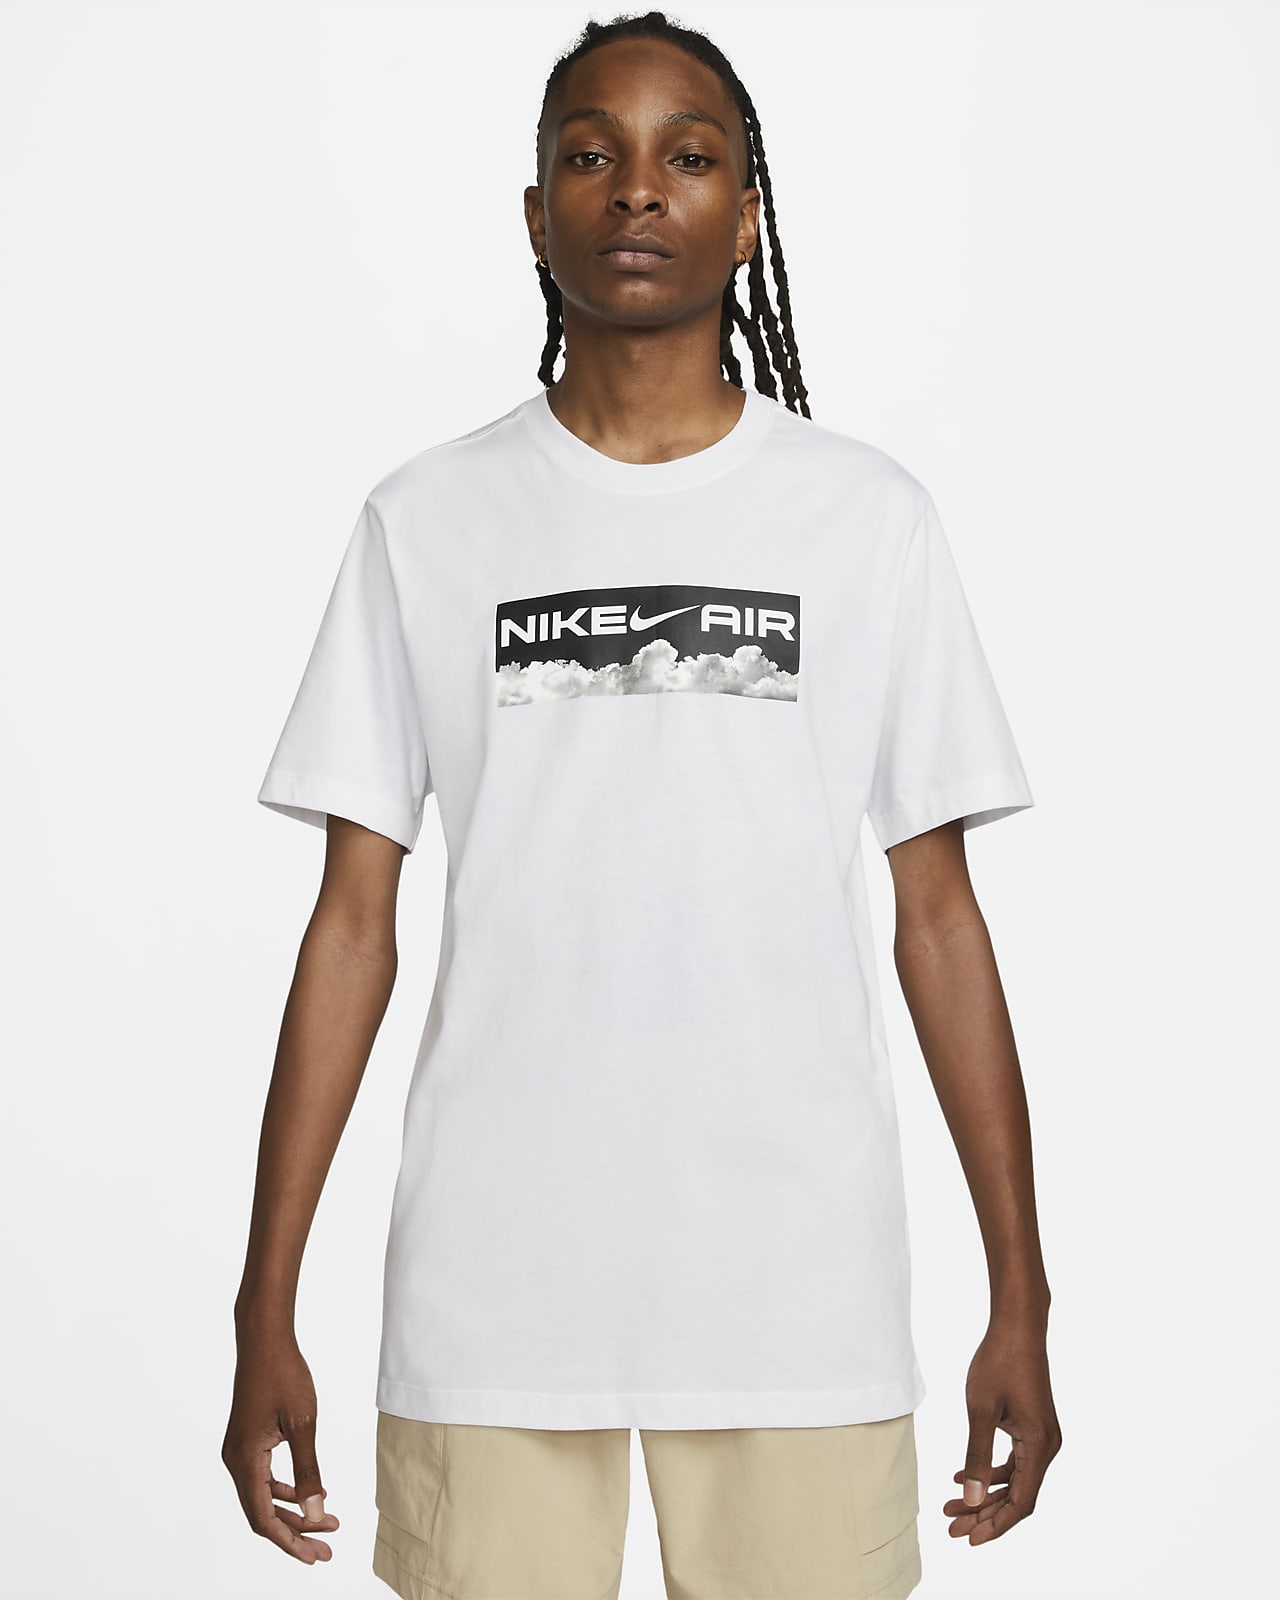 Reductor tornado Sabio Nike Sportswear Air Camiseta - Hombre. Nike ES